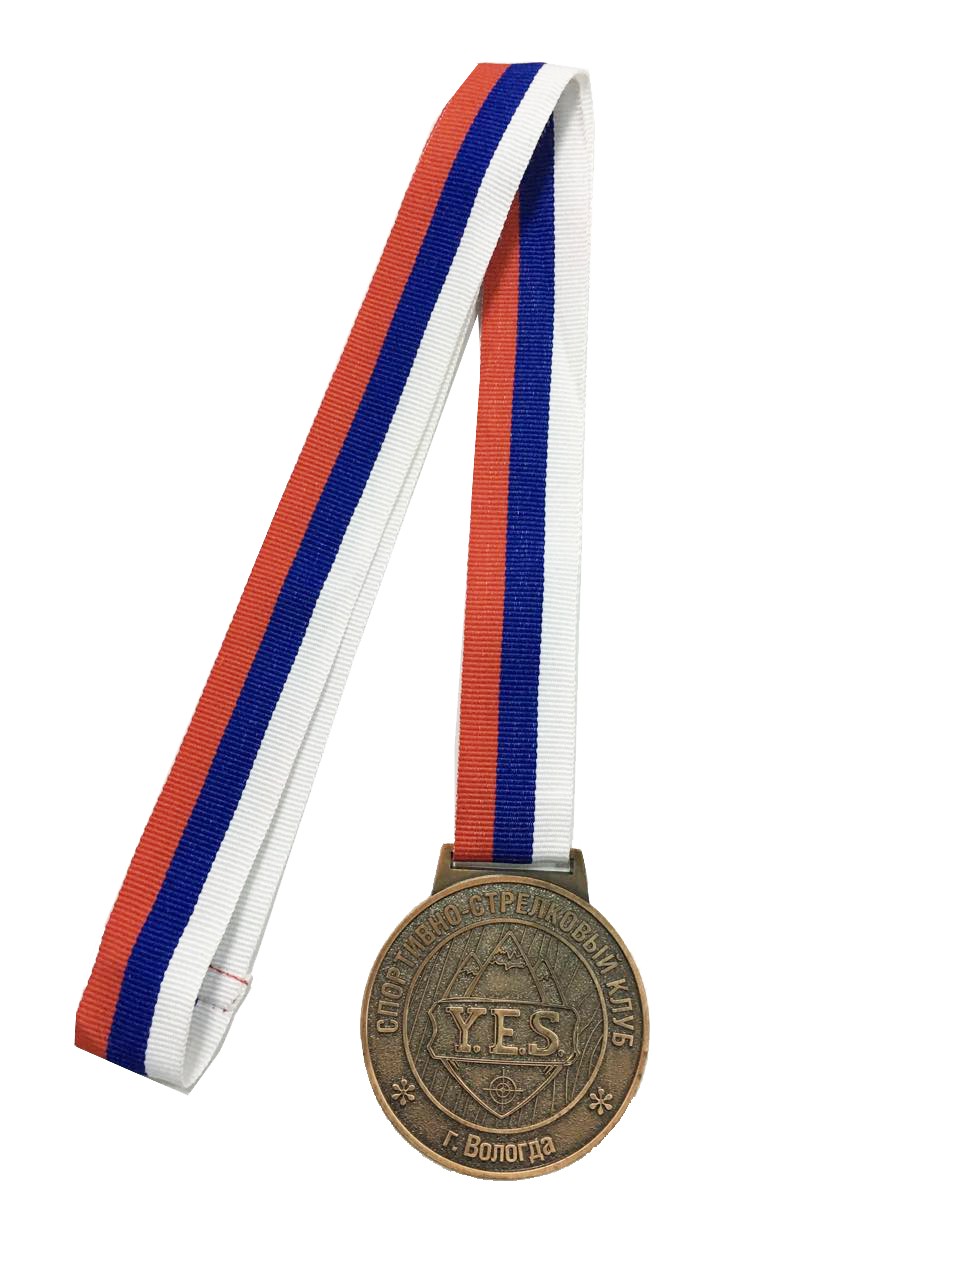 gold award metal graduation medal with ribbon